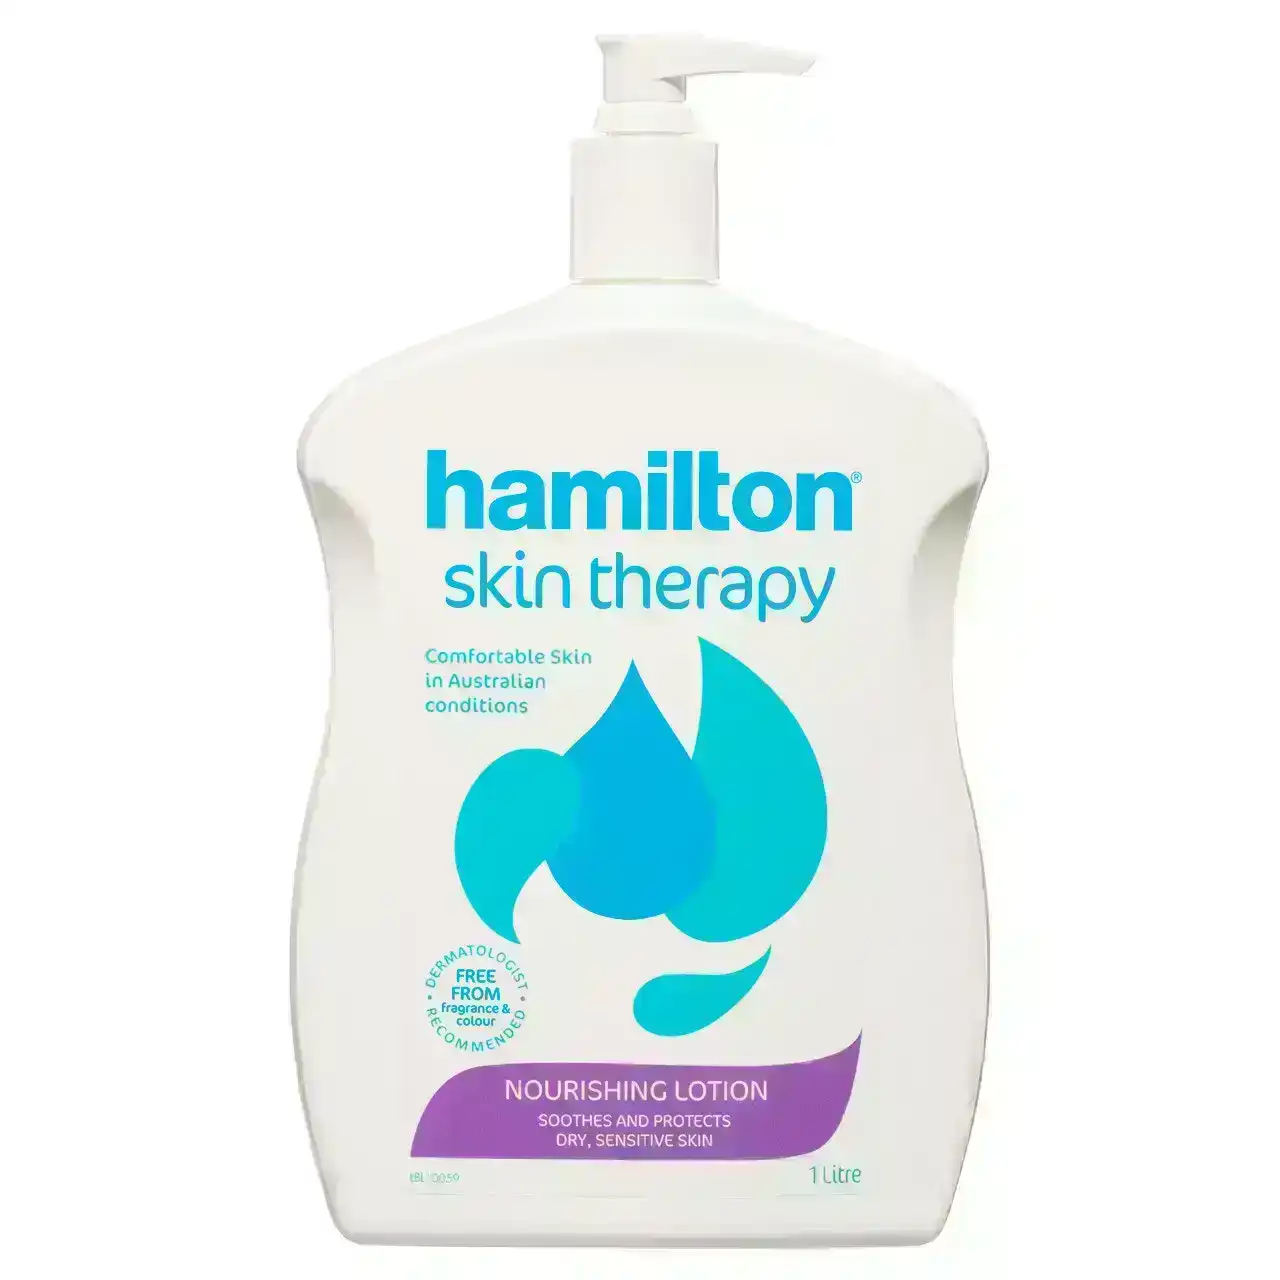 Hamilton(R) Skin Therapy Nourishing Lotion 1ltr